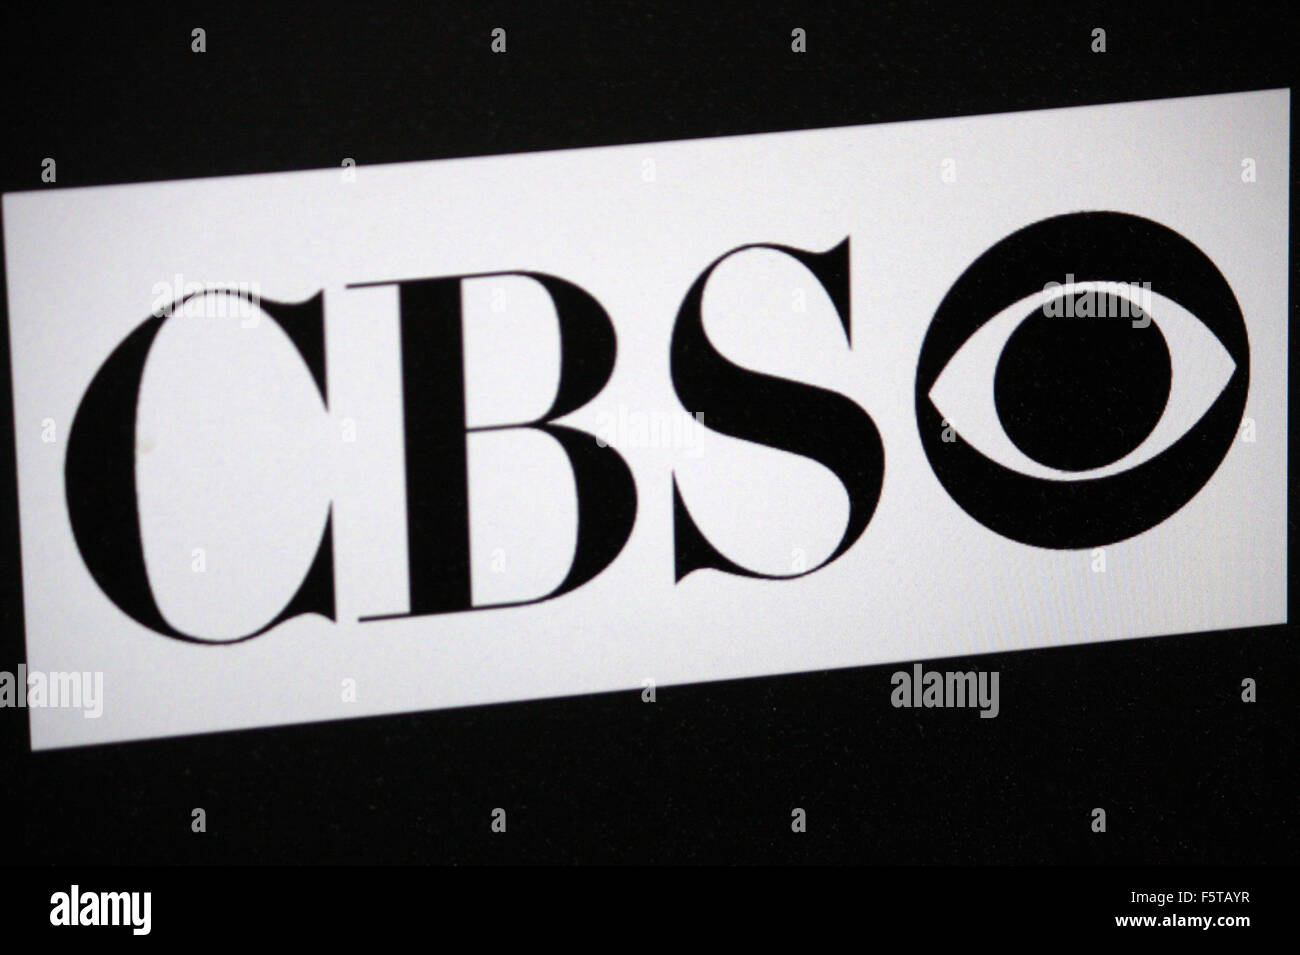 Markenname: 'CBS', Berlin. Stock Photo